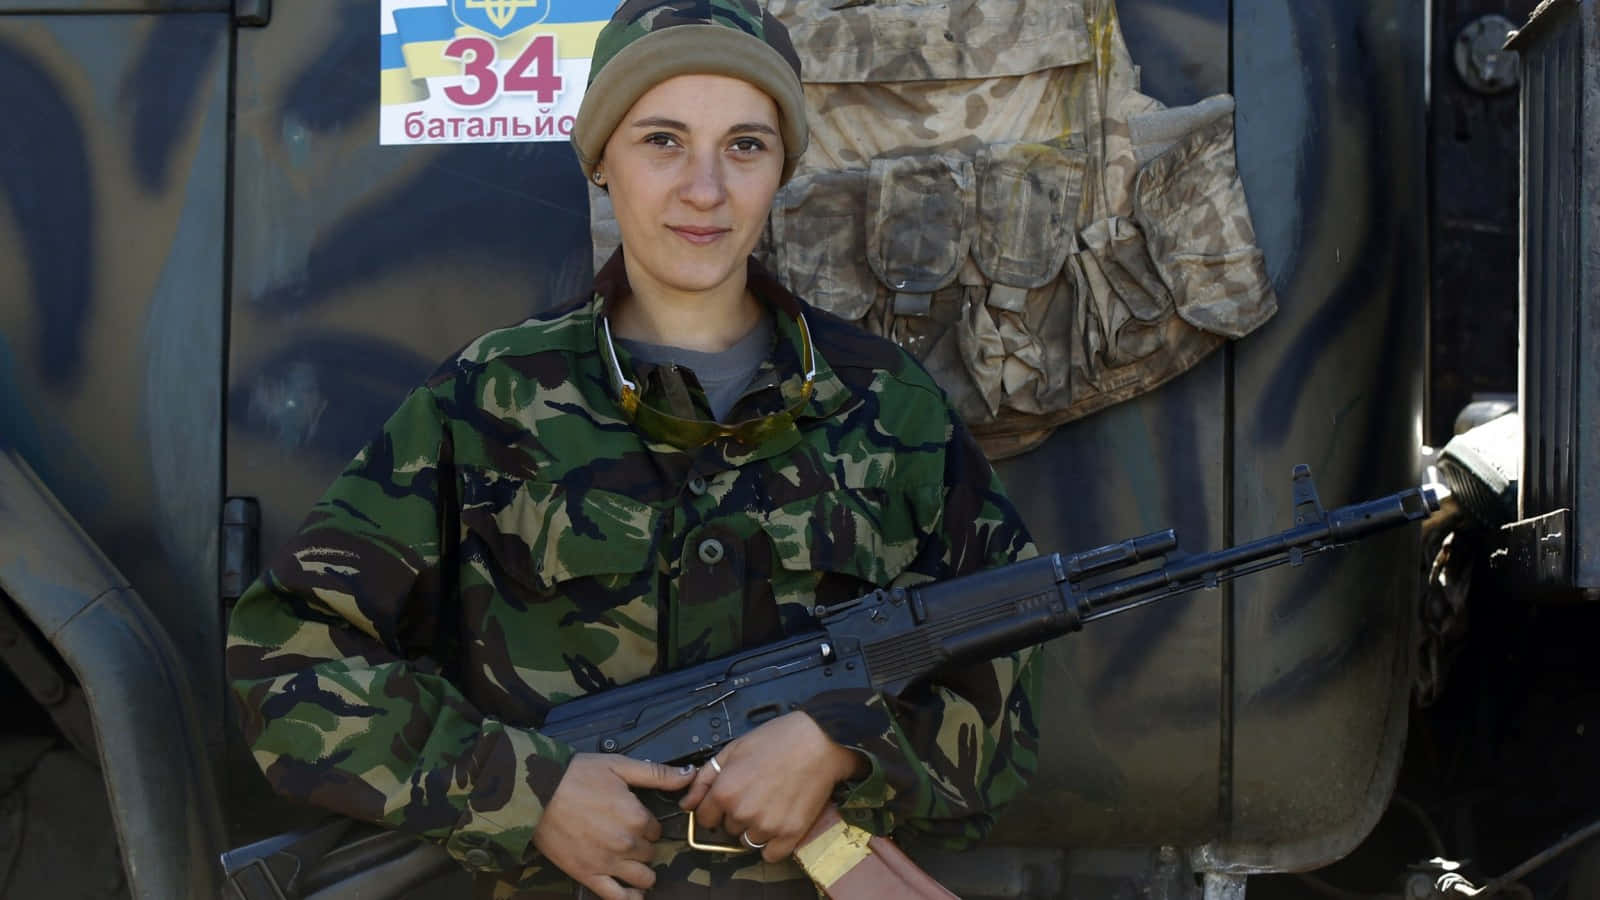 A Woman In Military Uniform Holding An Ak47